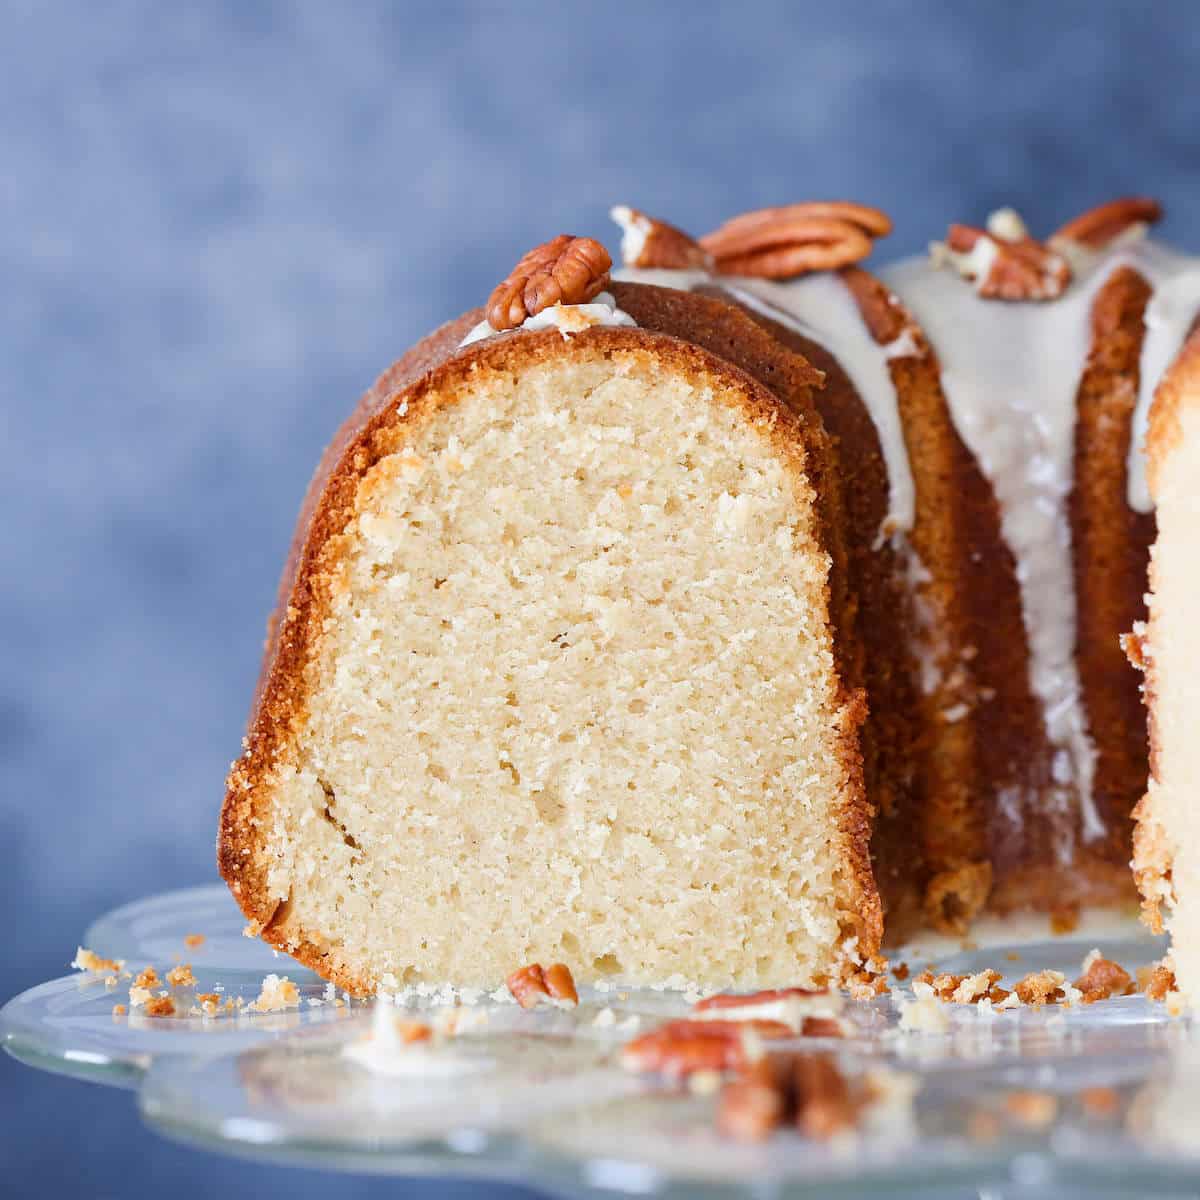 https://cheflindseyfarr.com/wp-content/uploads/2021/10/maple-pound-cake-maple-glaze-featured.jpg